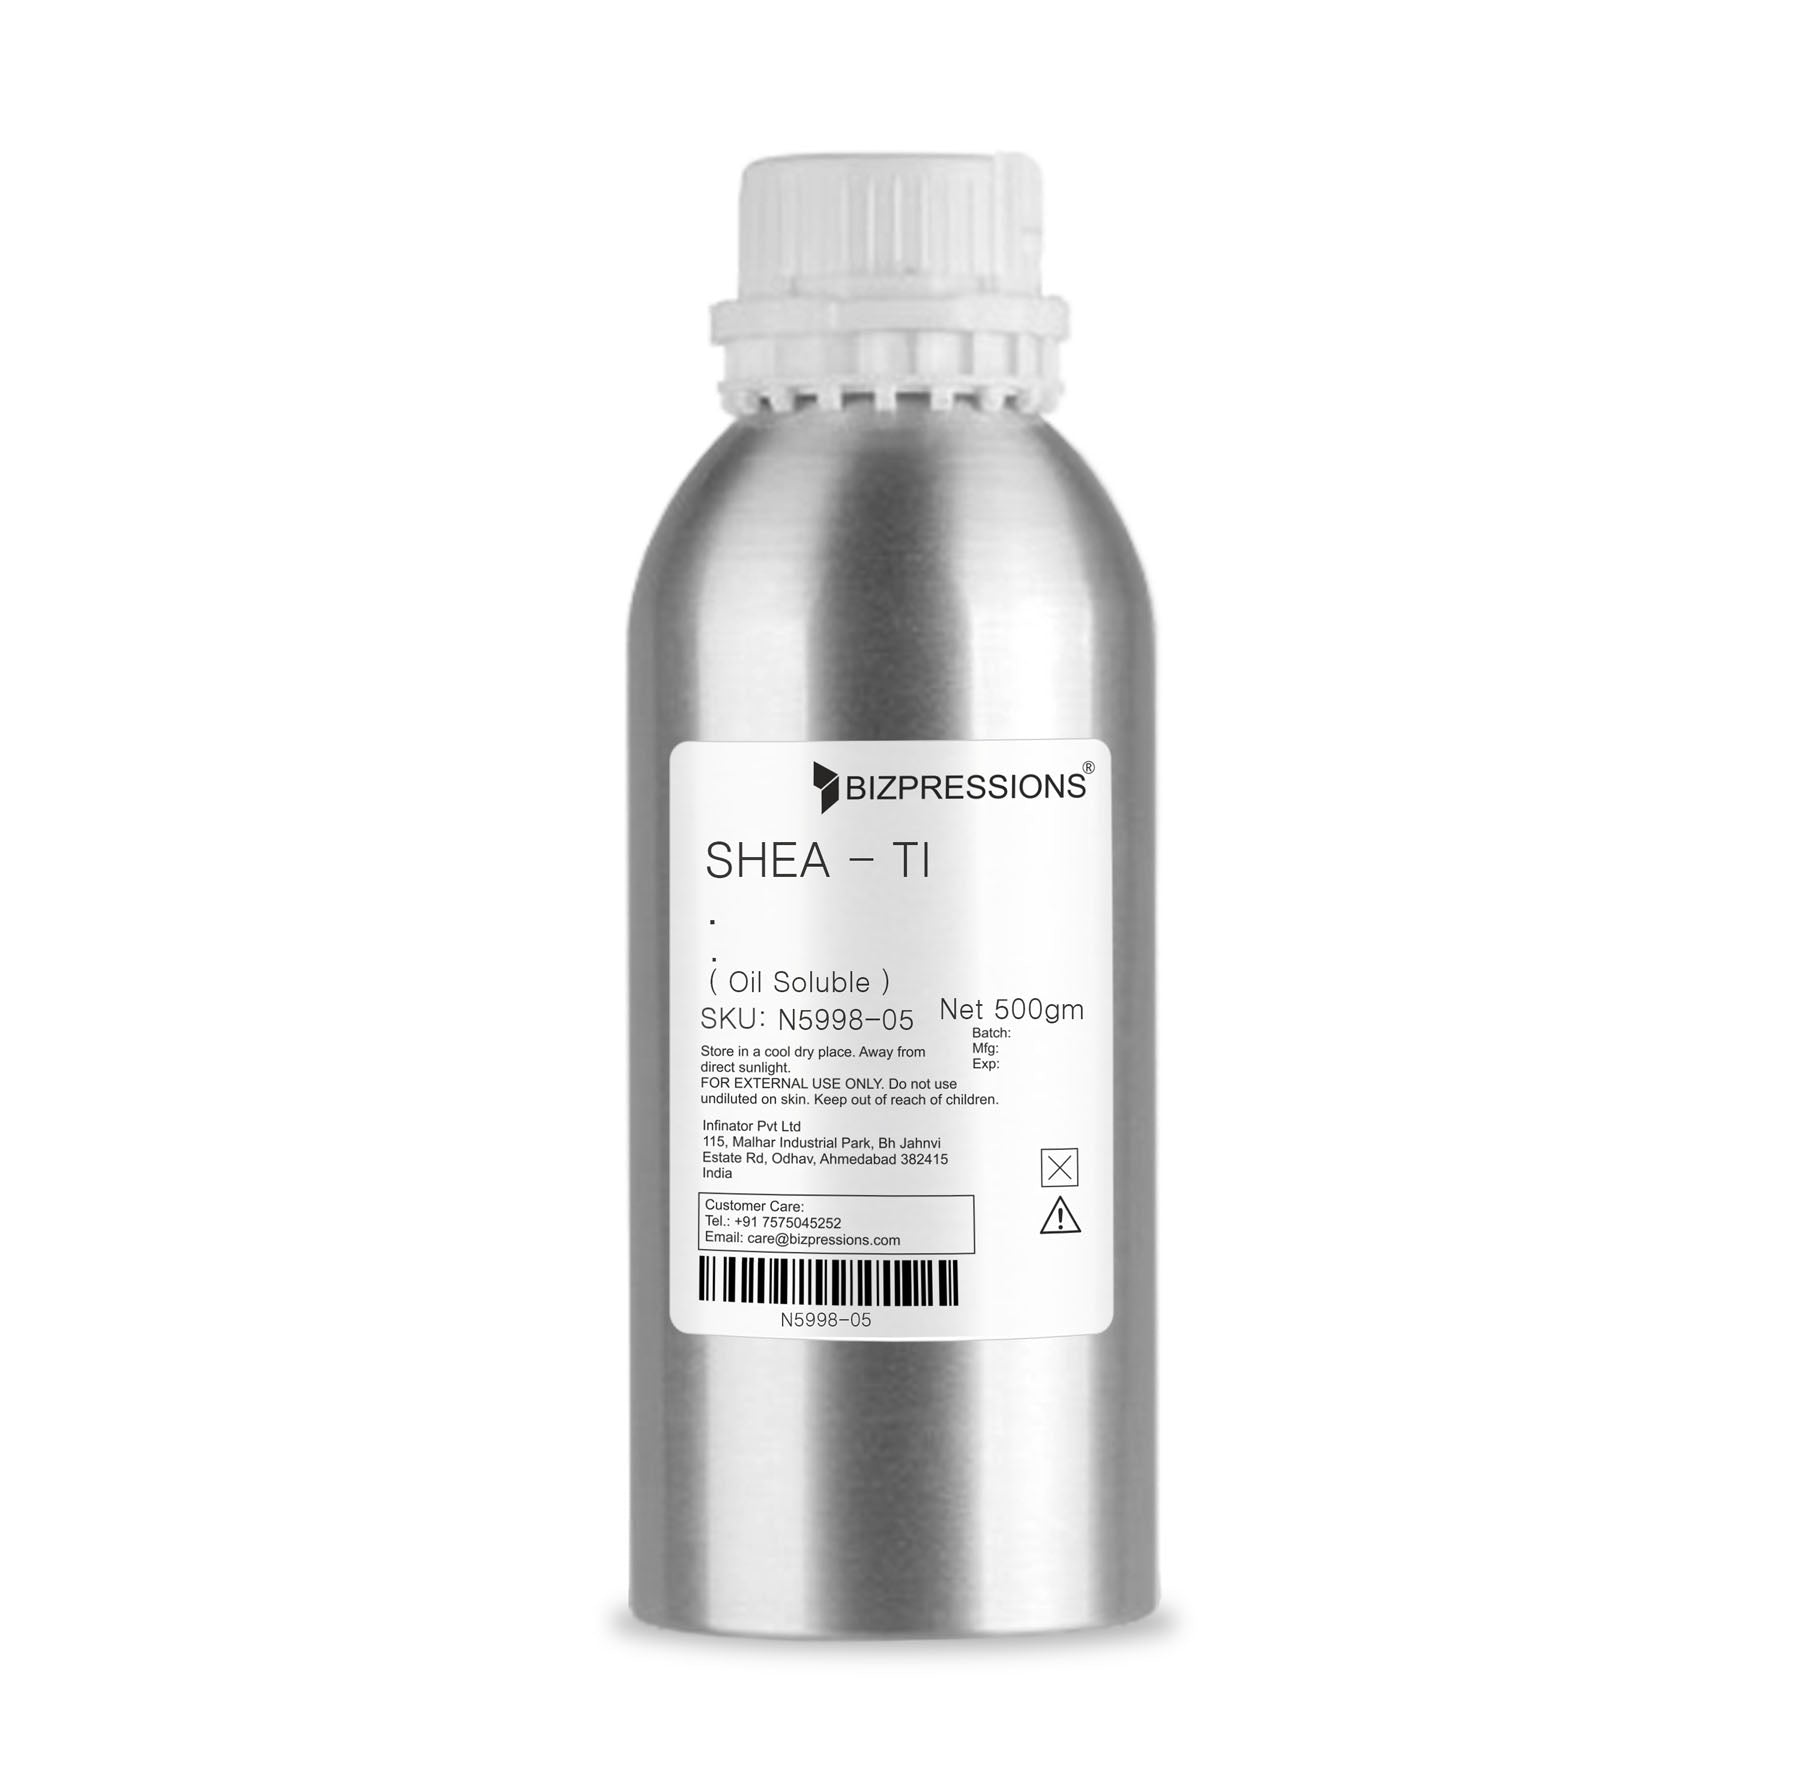 SHEA - TI - Fragrance ( Oil Soluble ) - 500 gm